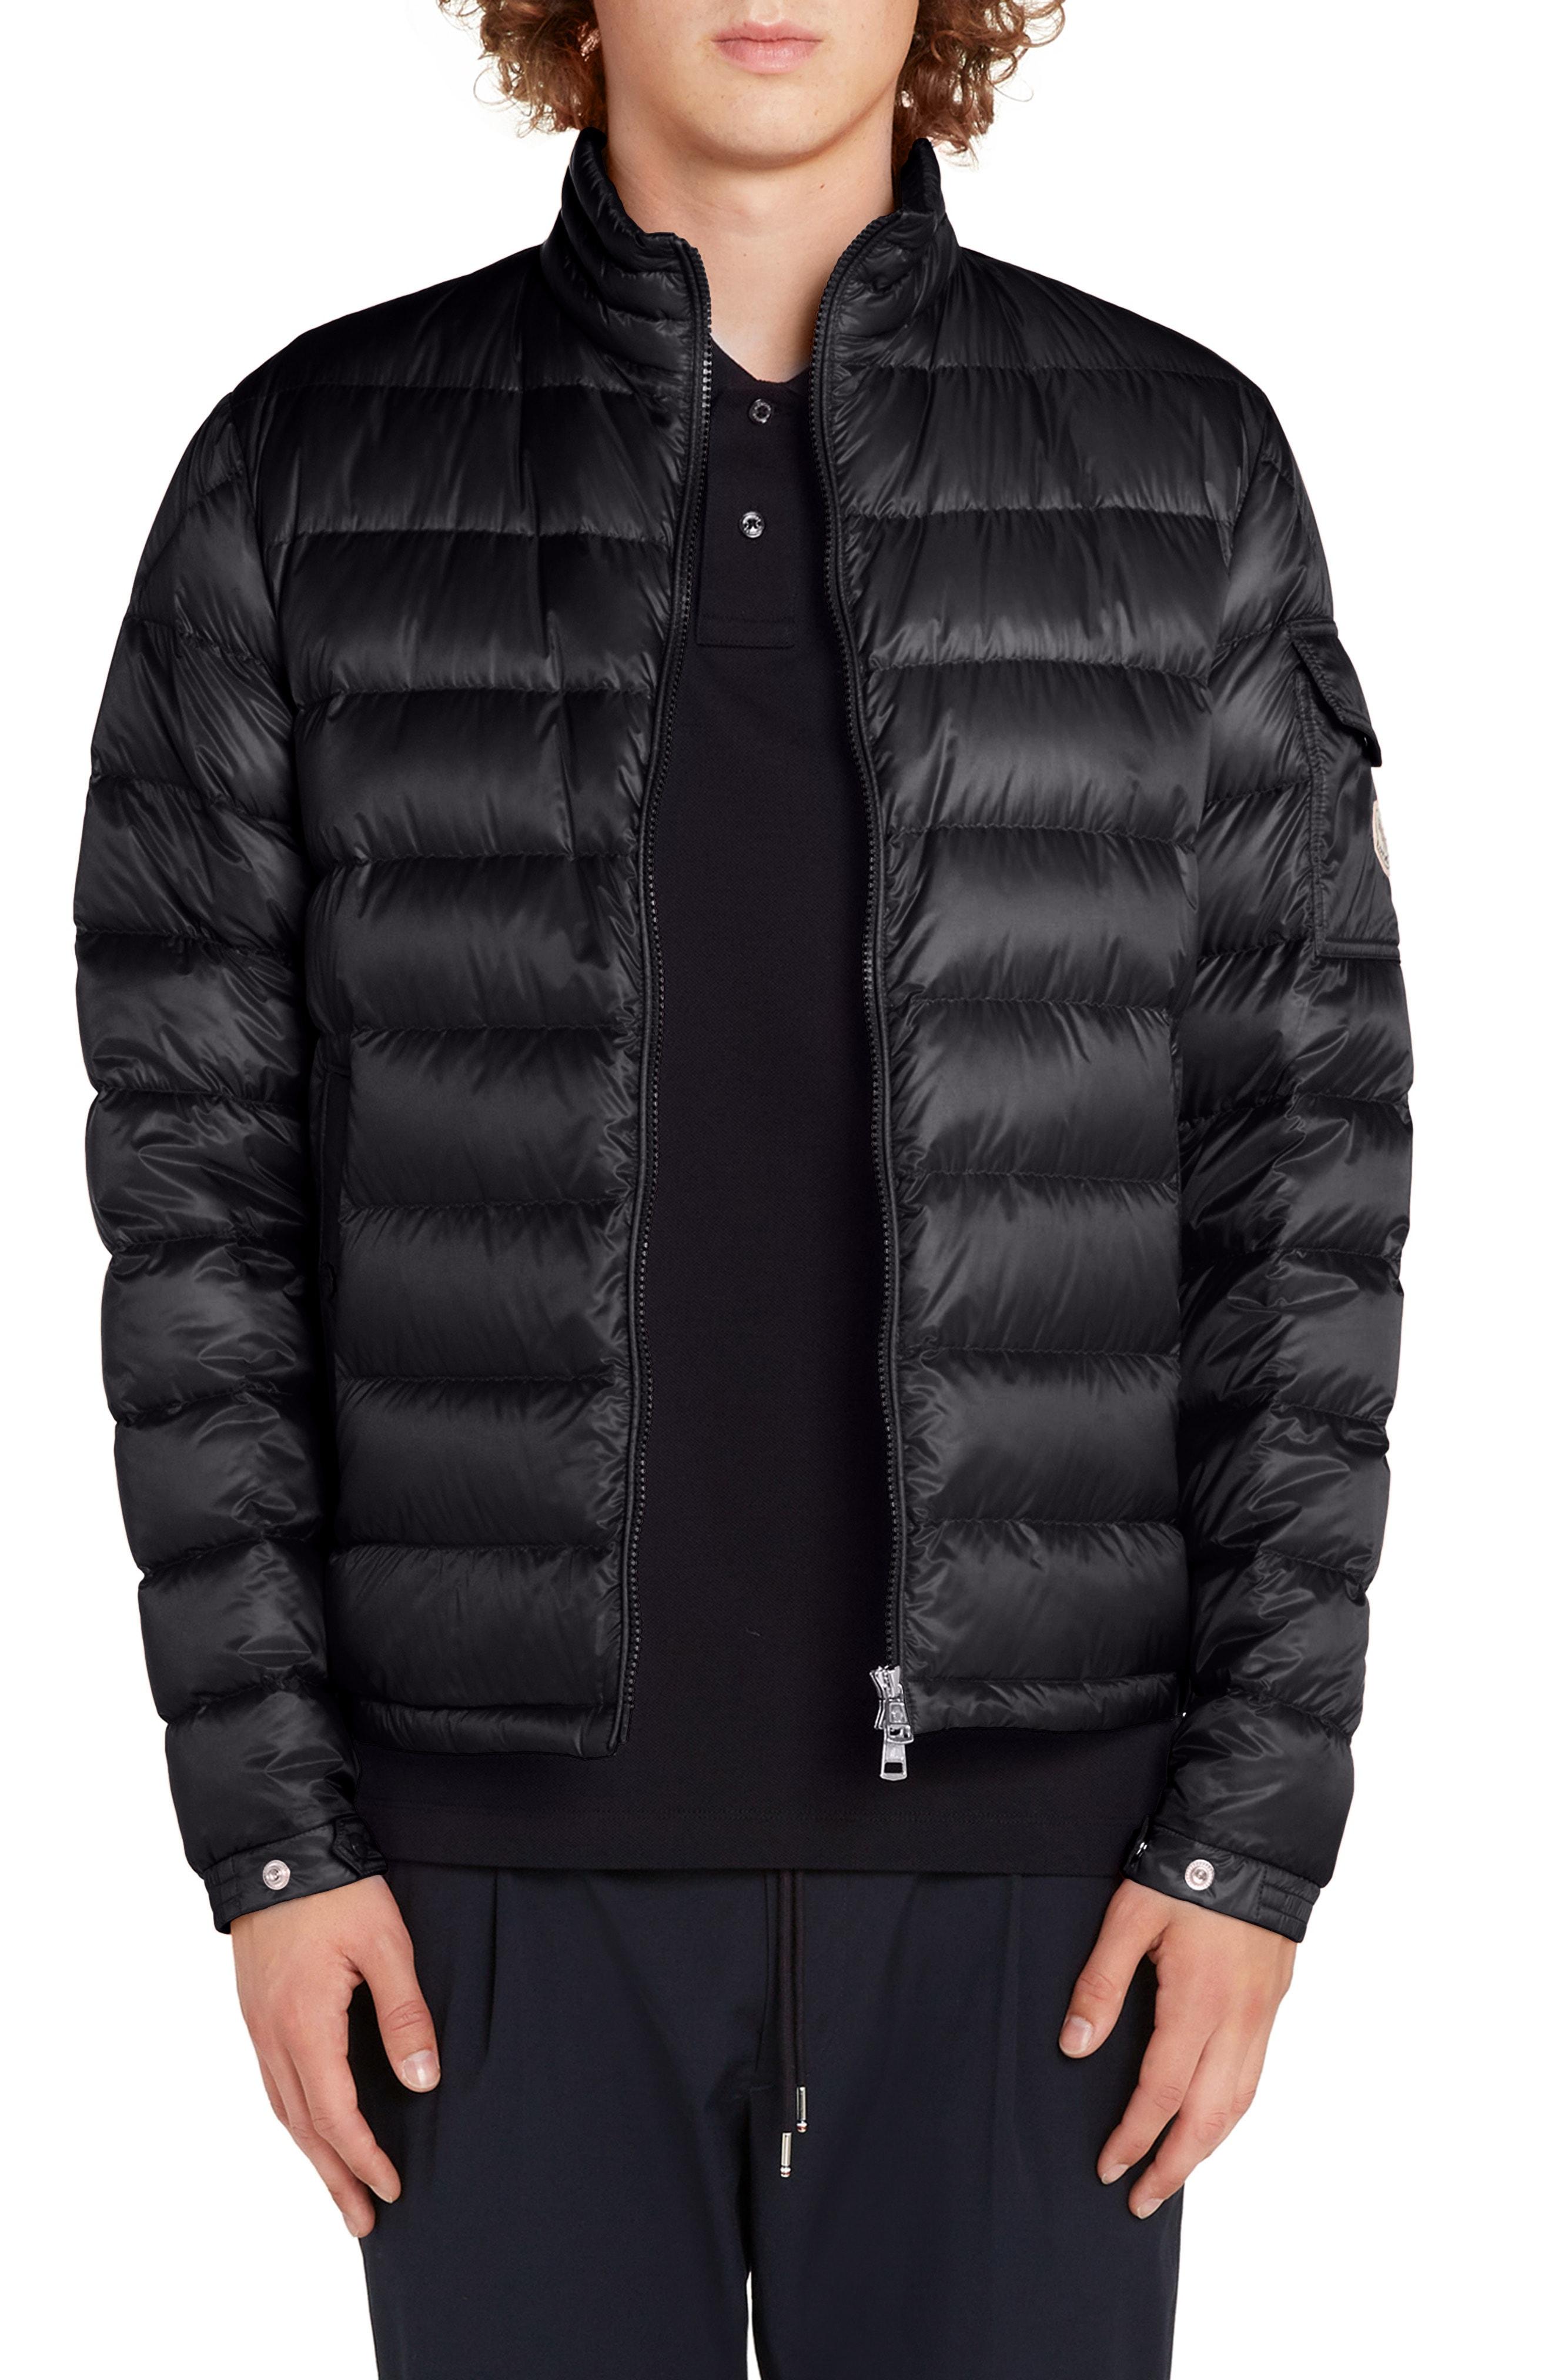 Lyst - Moncler Lambot Zip Up Jacket in Black for Men